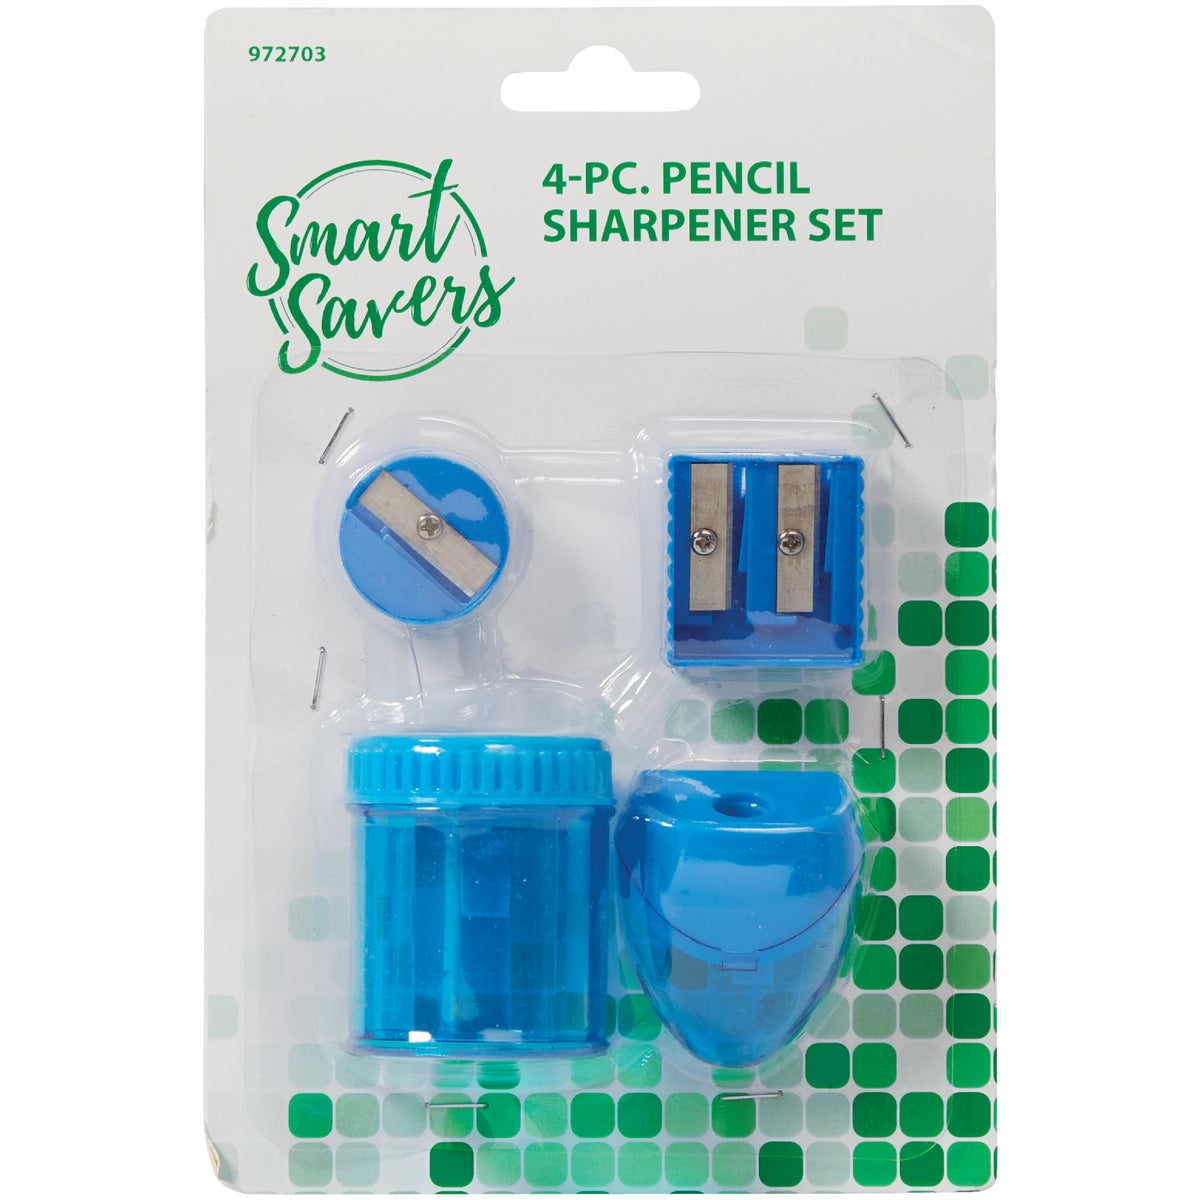 Item 972703, Smart Savers pencil sharpener set.